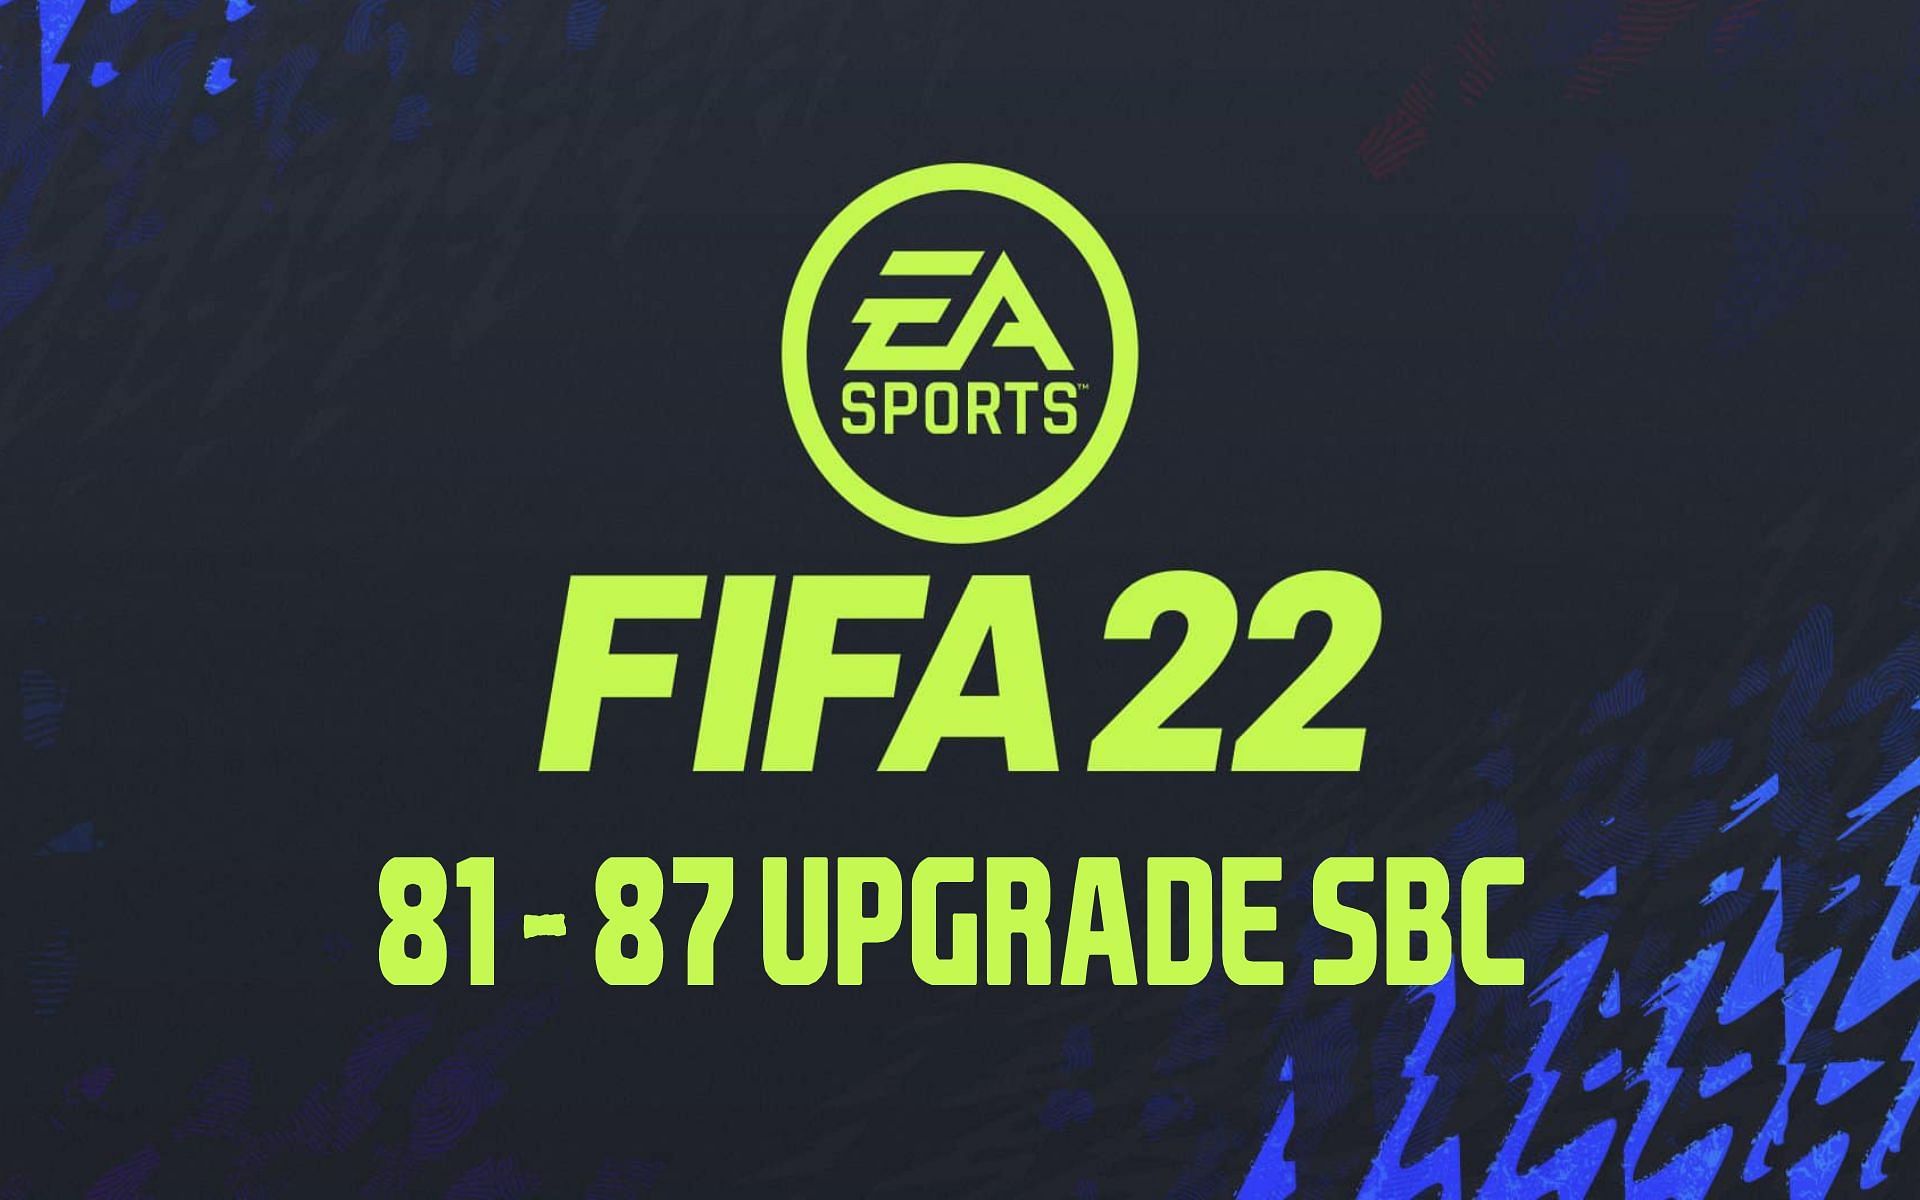 81 - 87 Upgrade SBC in FIFA 22 Ultimate Team (Image via Sportskeeda)